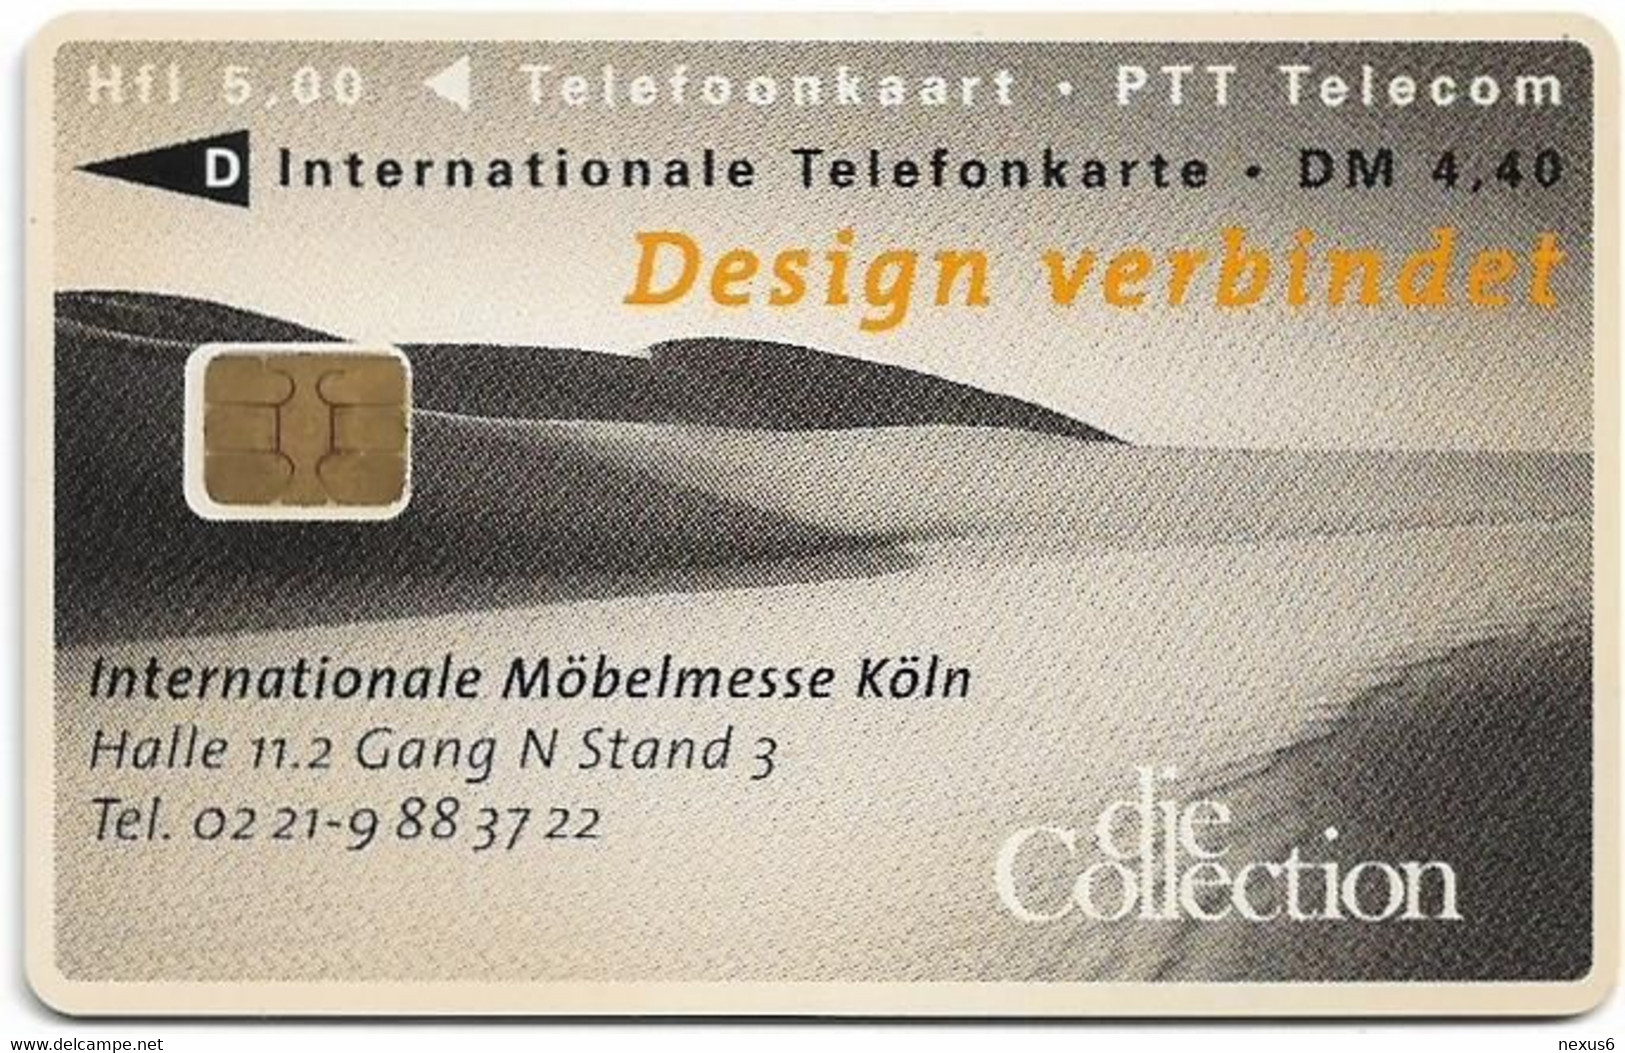 Netherlands/Germany (Cooperation) - CXD 698 - Design Verbindet - Die Collection Möbelmesse Köln, 5ƒ, Mint - Privé